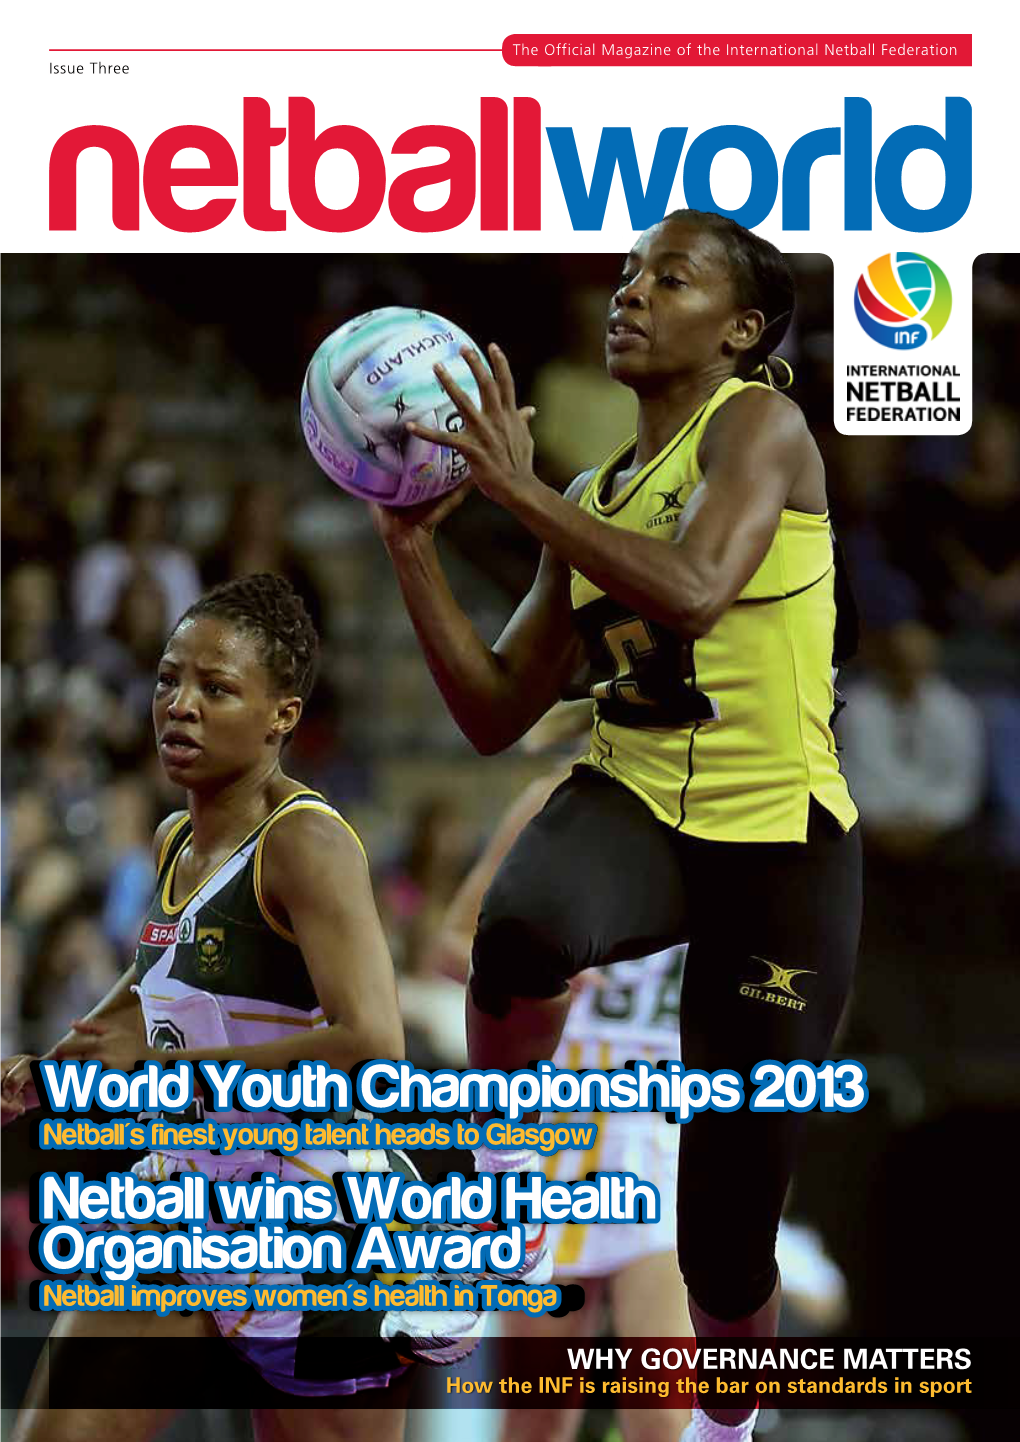 World Youth Championships 2013 Netball Wins World Health Organisation Award World Youth Championships 2013 Netball Wins World He